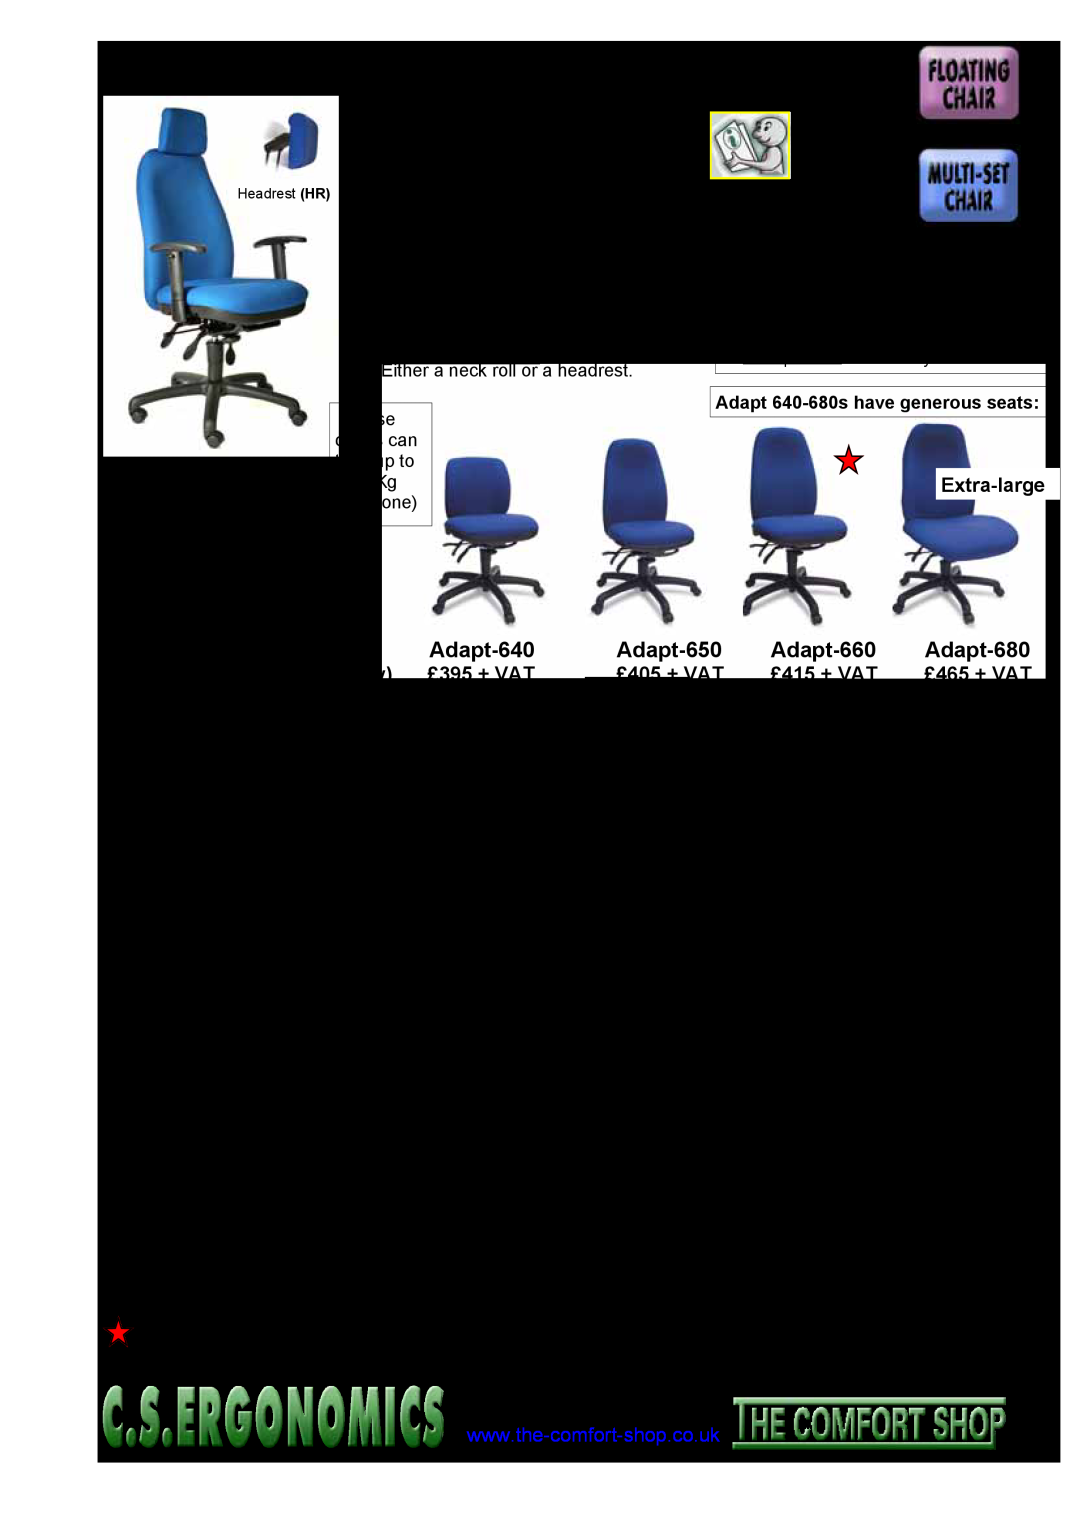 Fellowes RH 300 Adapt—600range chairs With knee-tiltaction, Adapt-640, Adapt-650, Adapt-660, Adapt-680, Adapt—660, Code 